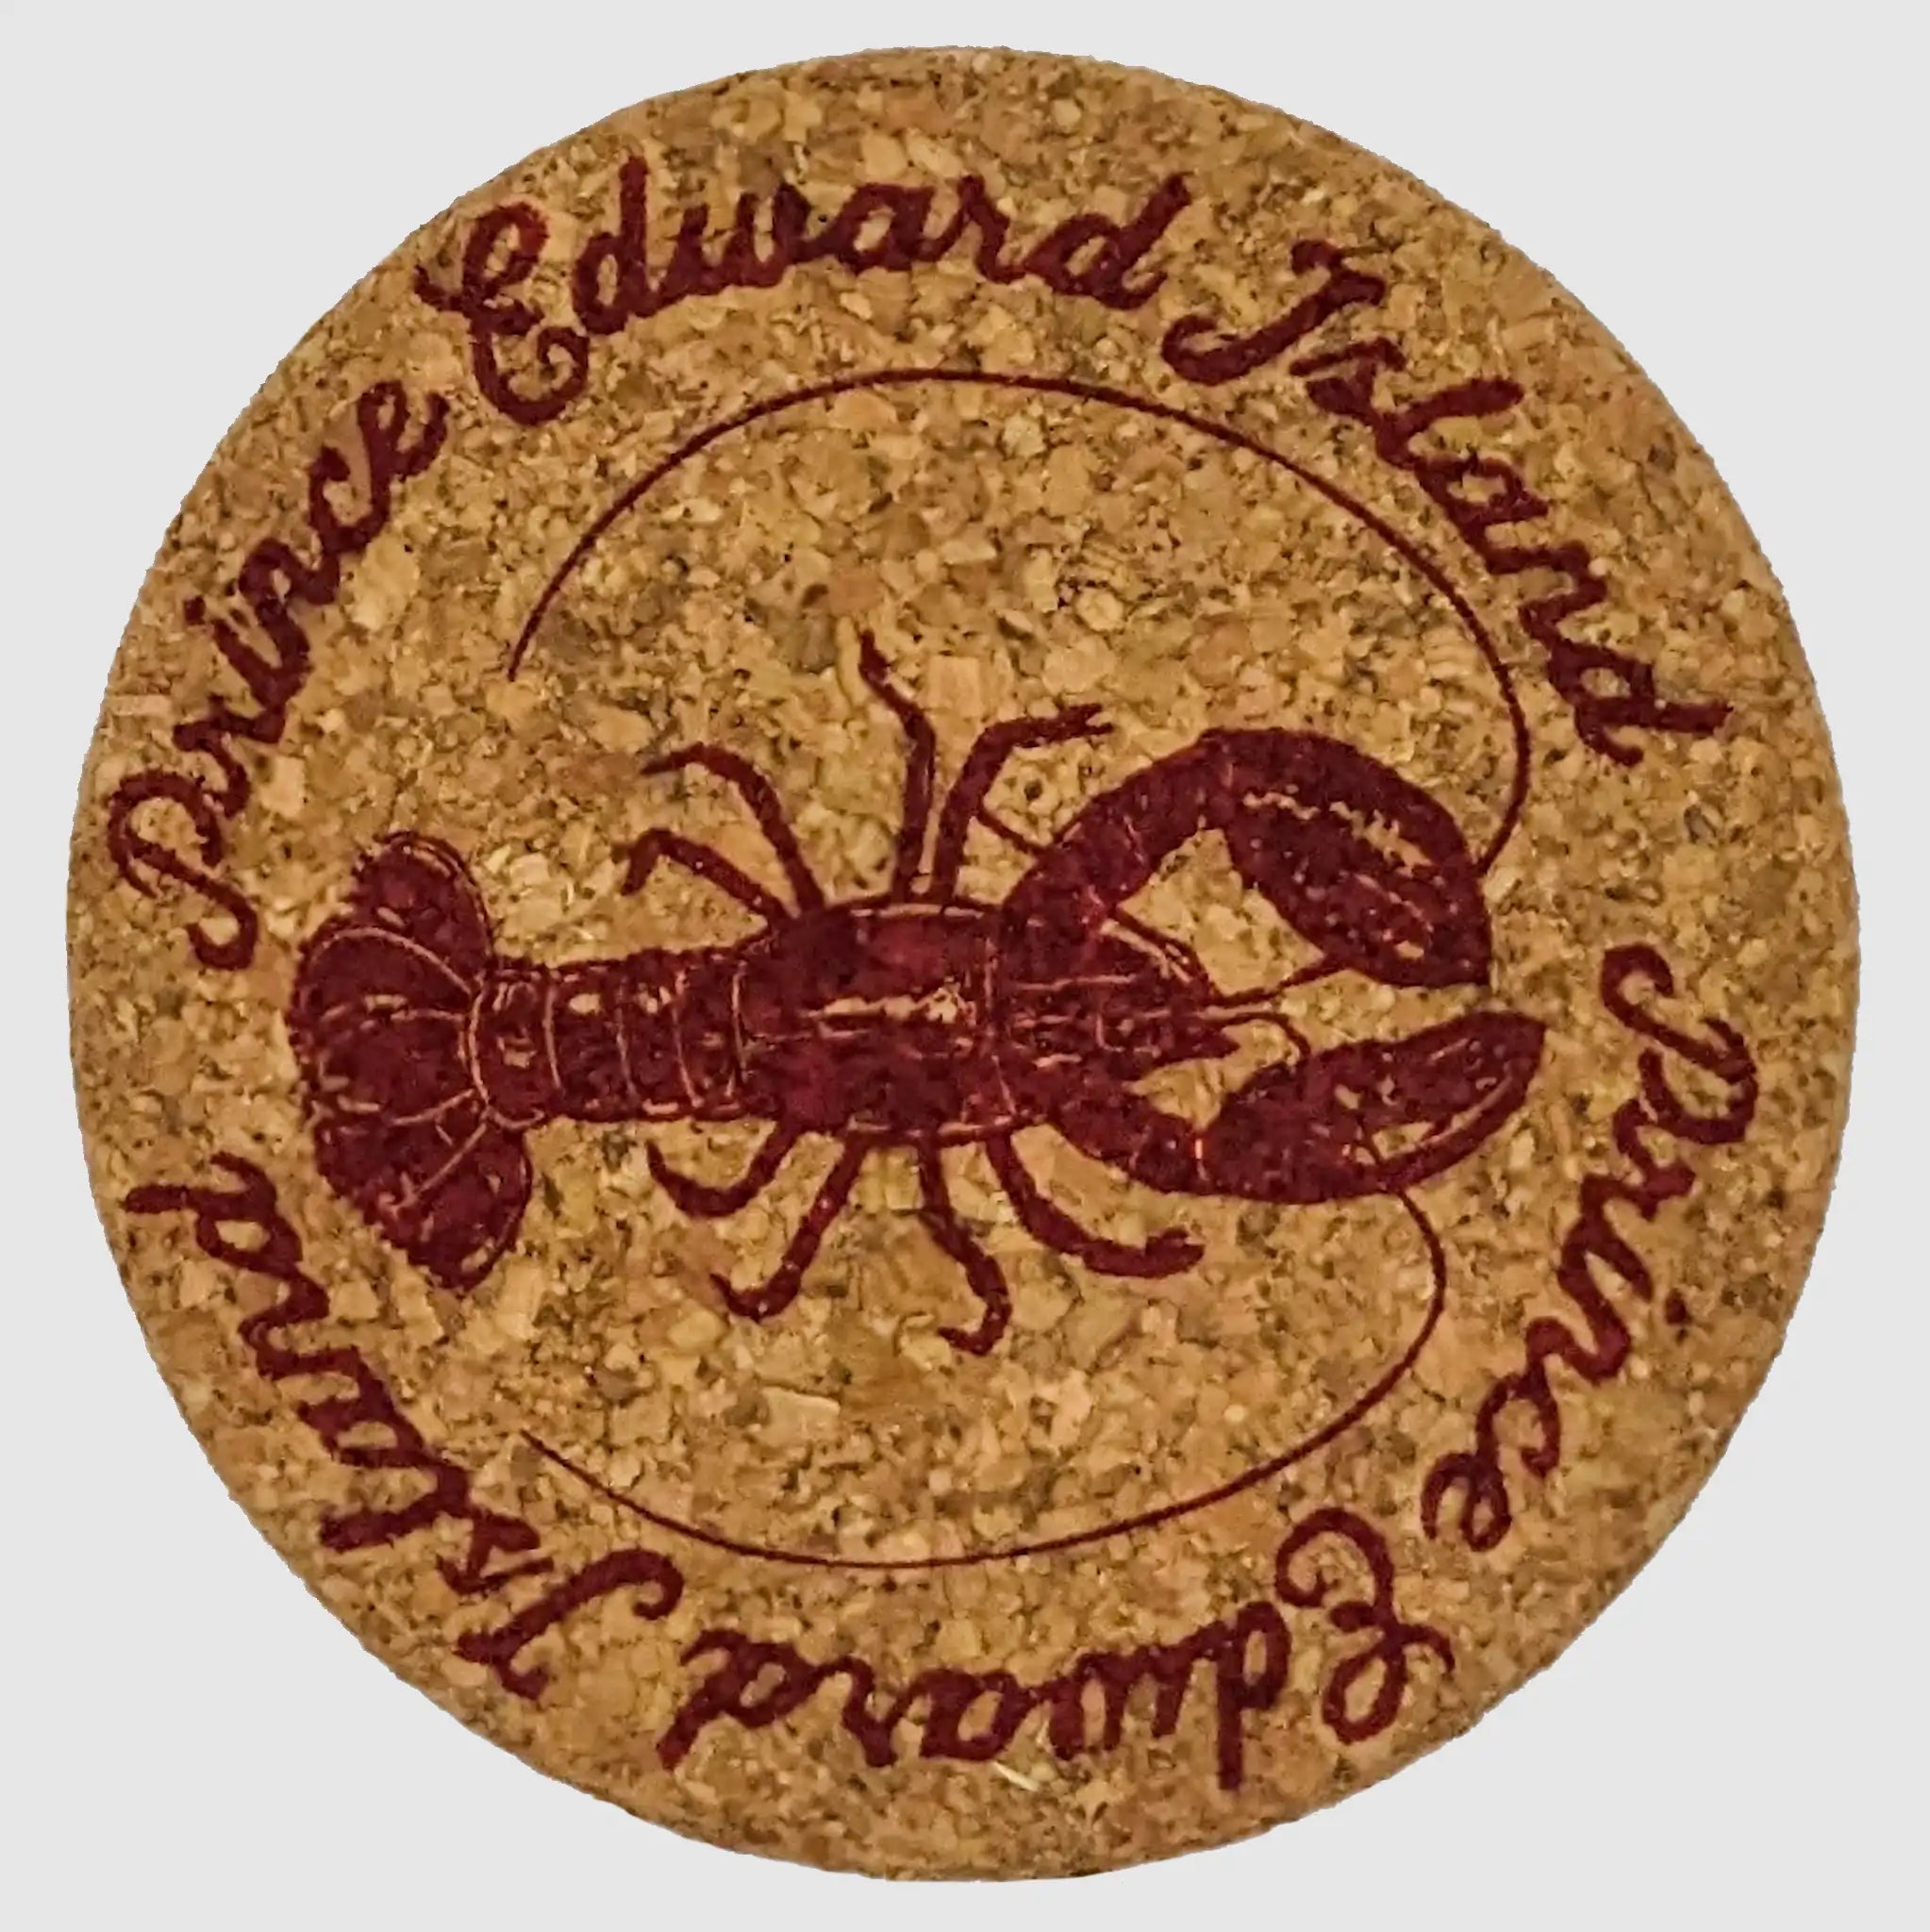 Prince Edward Island Lobster Coasters